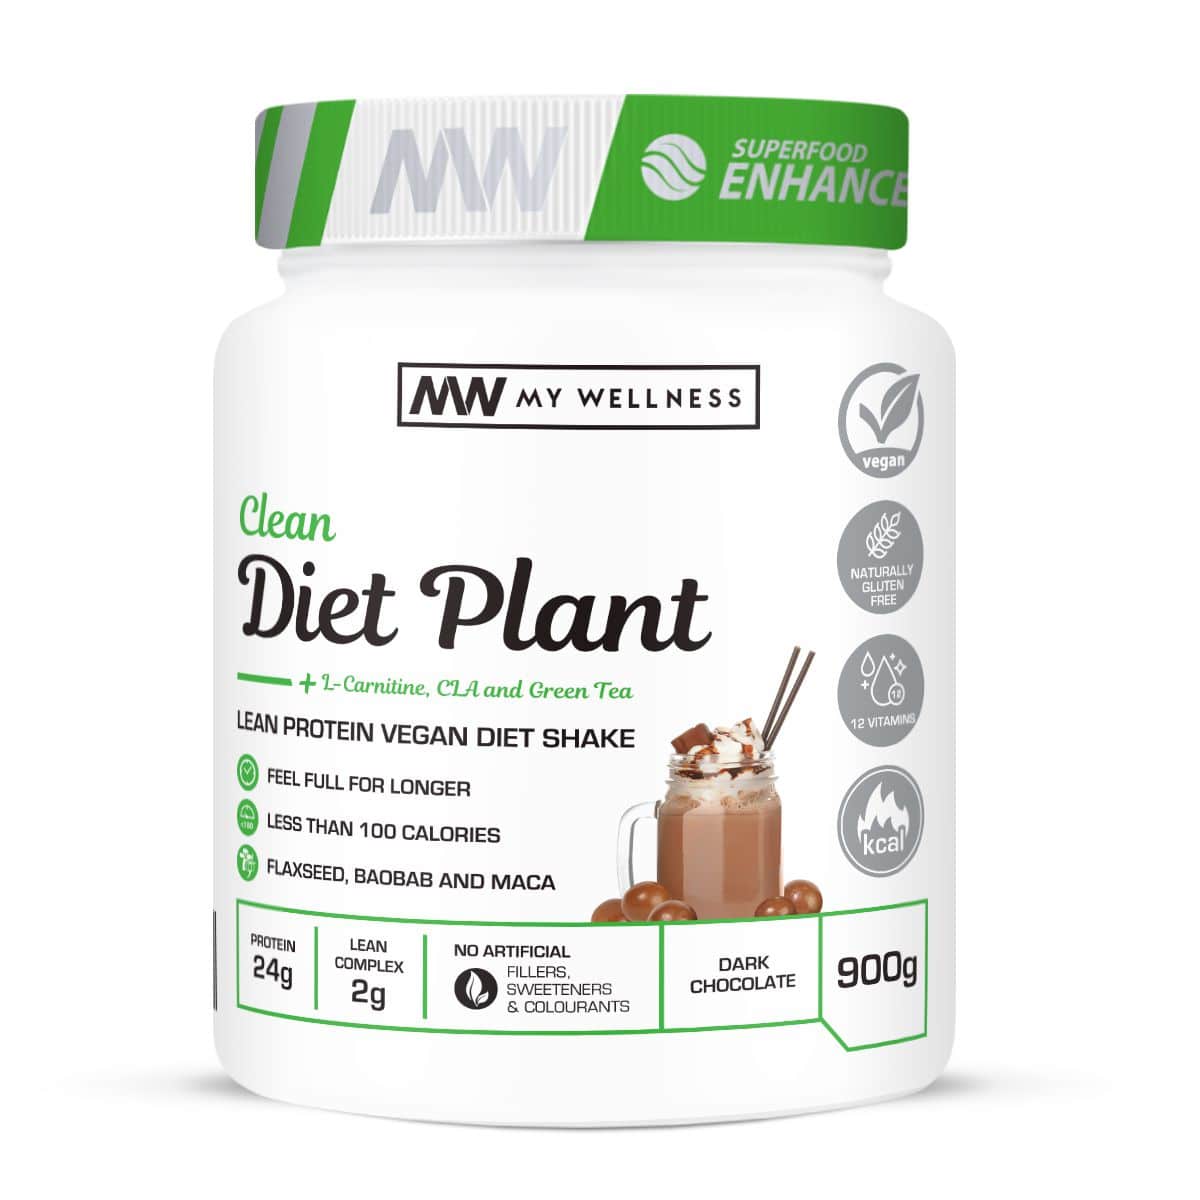 My Wellness - Clean Diet Plant 900g - Belgium Chocilate